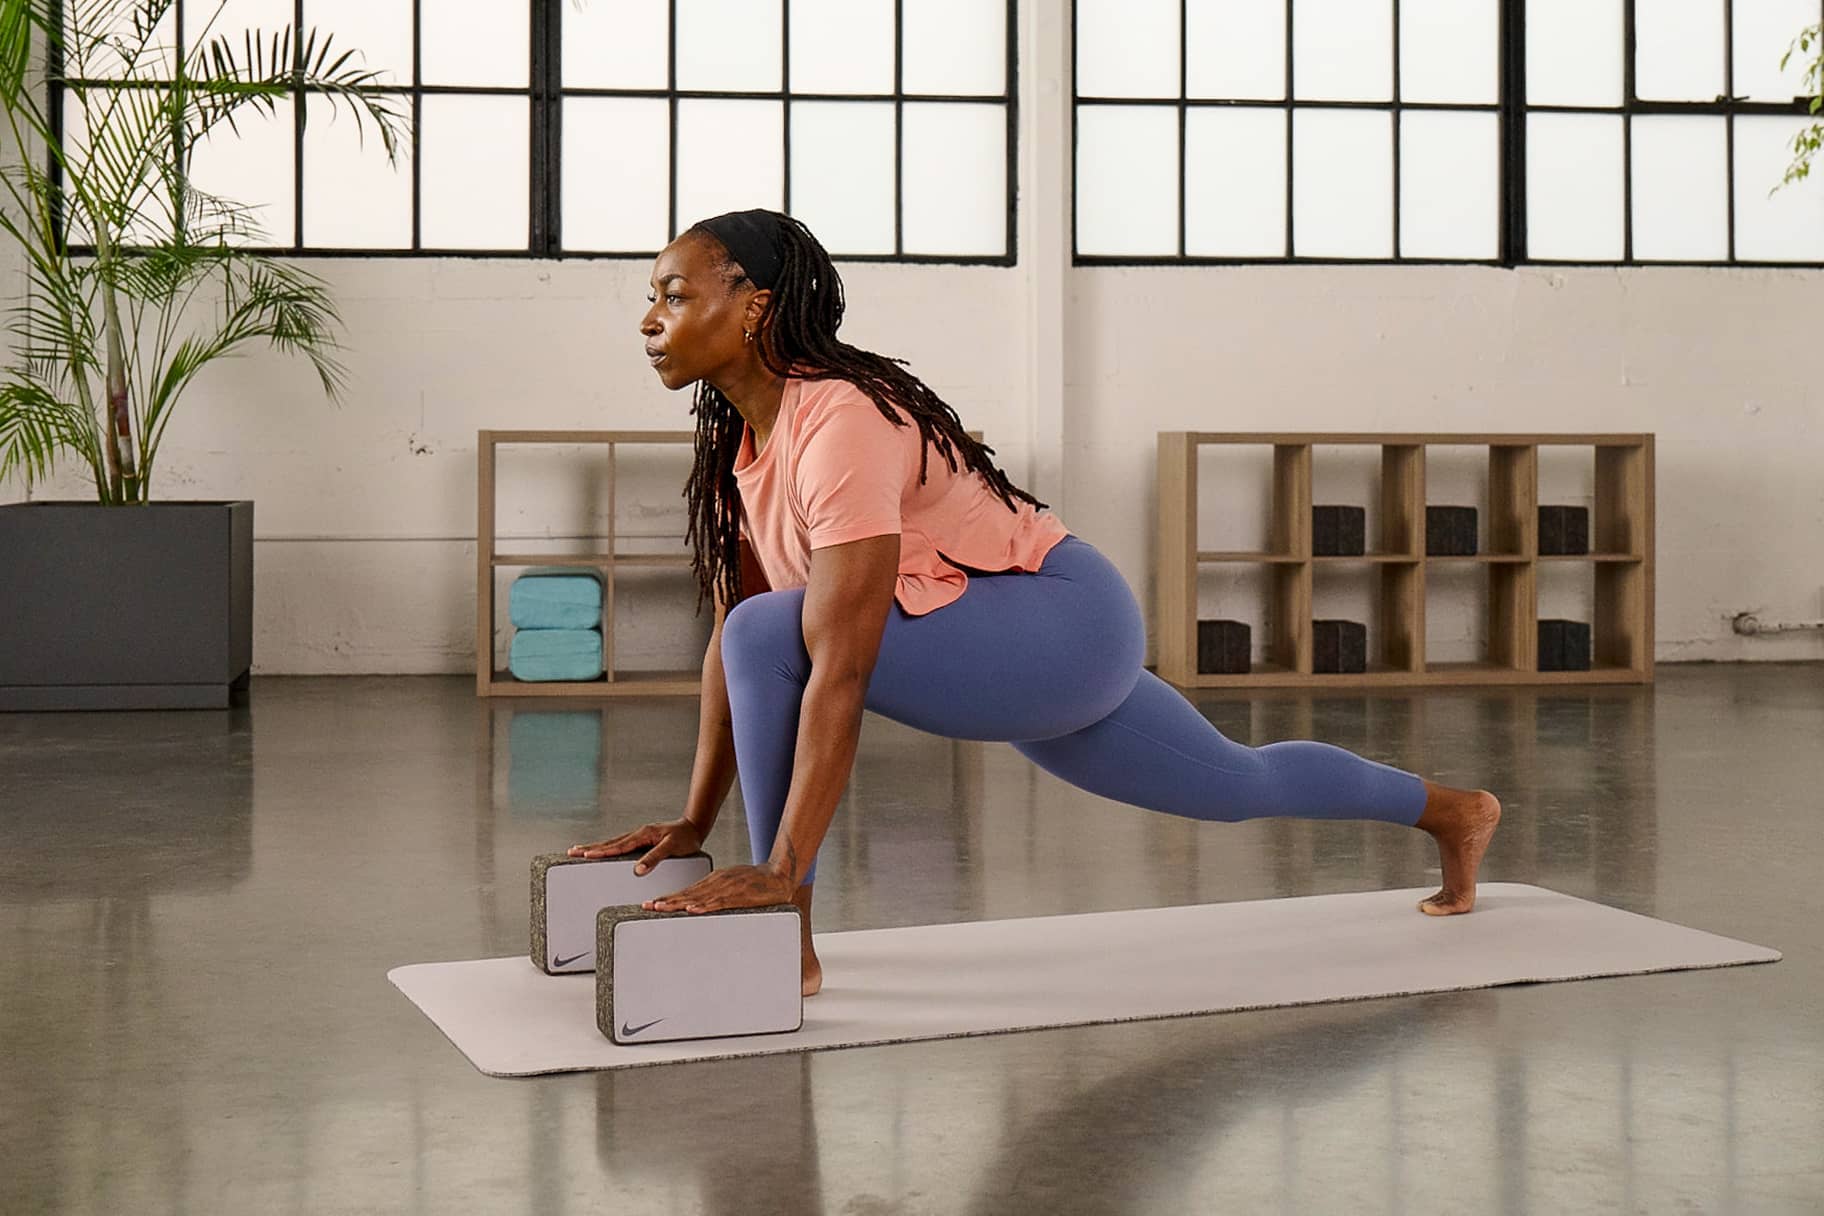 Comment utiliser les blocs de yoga : 5 postures à essayer. Nike CA